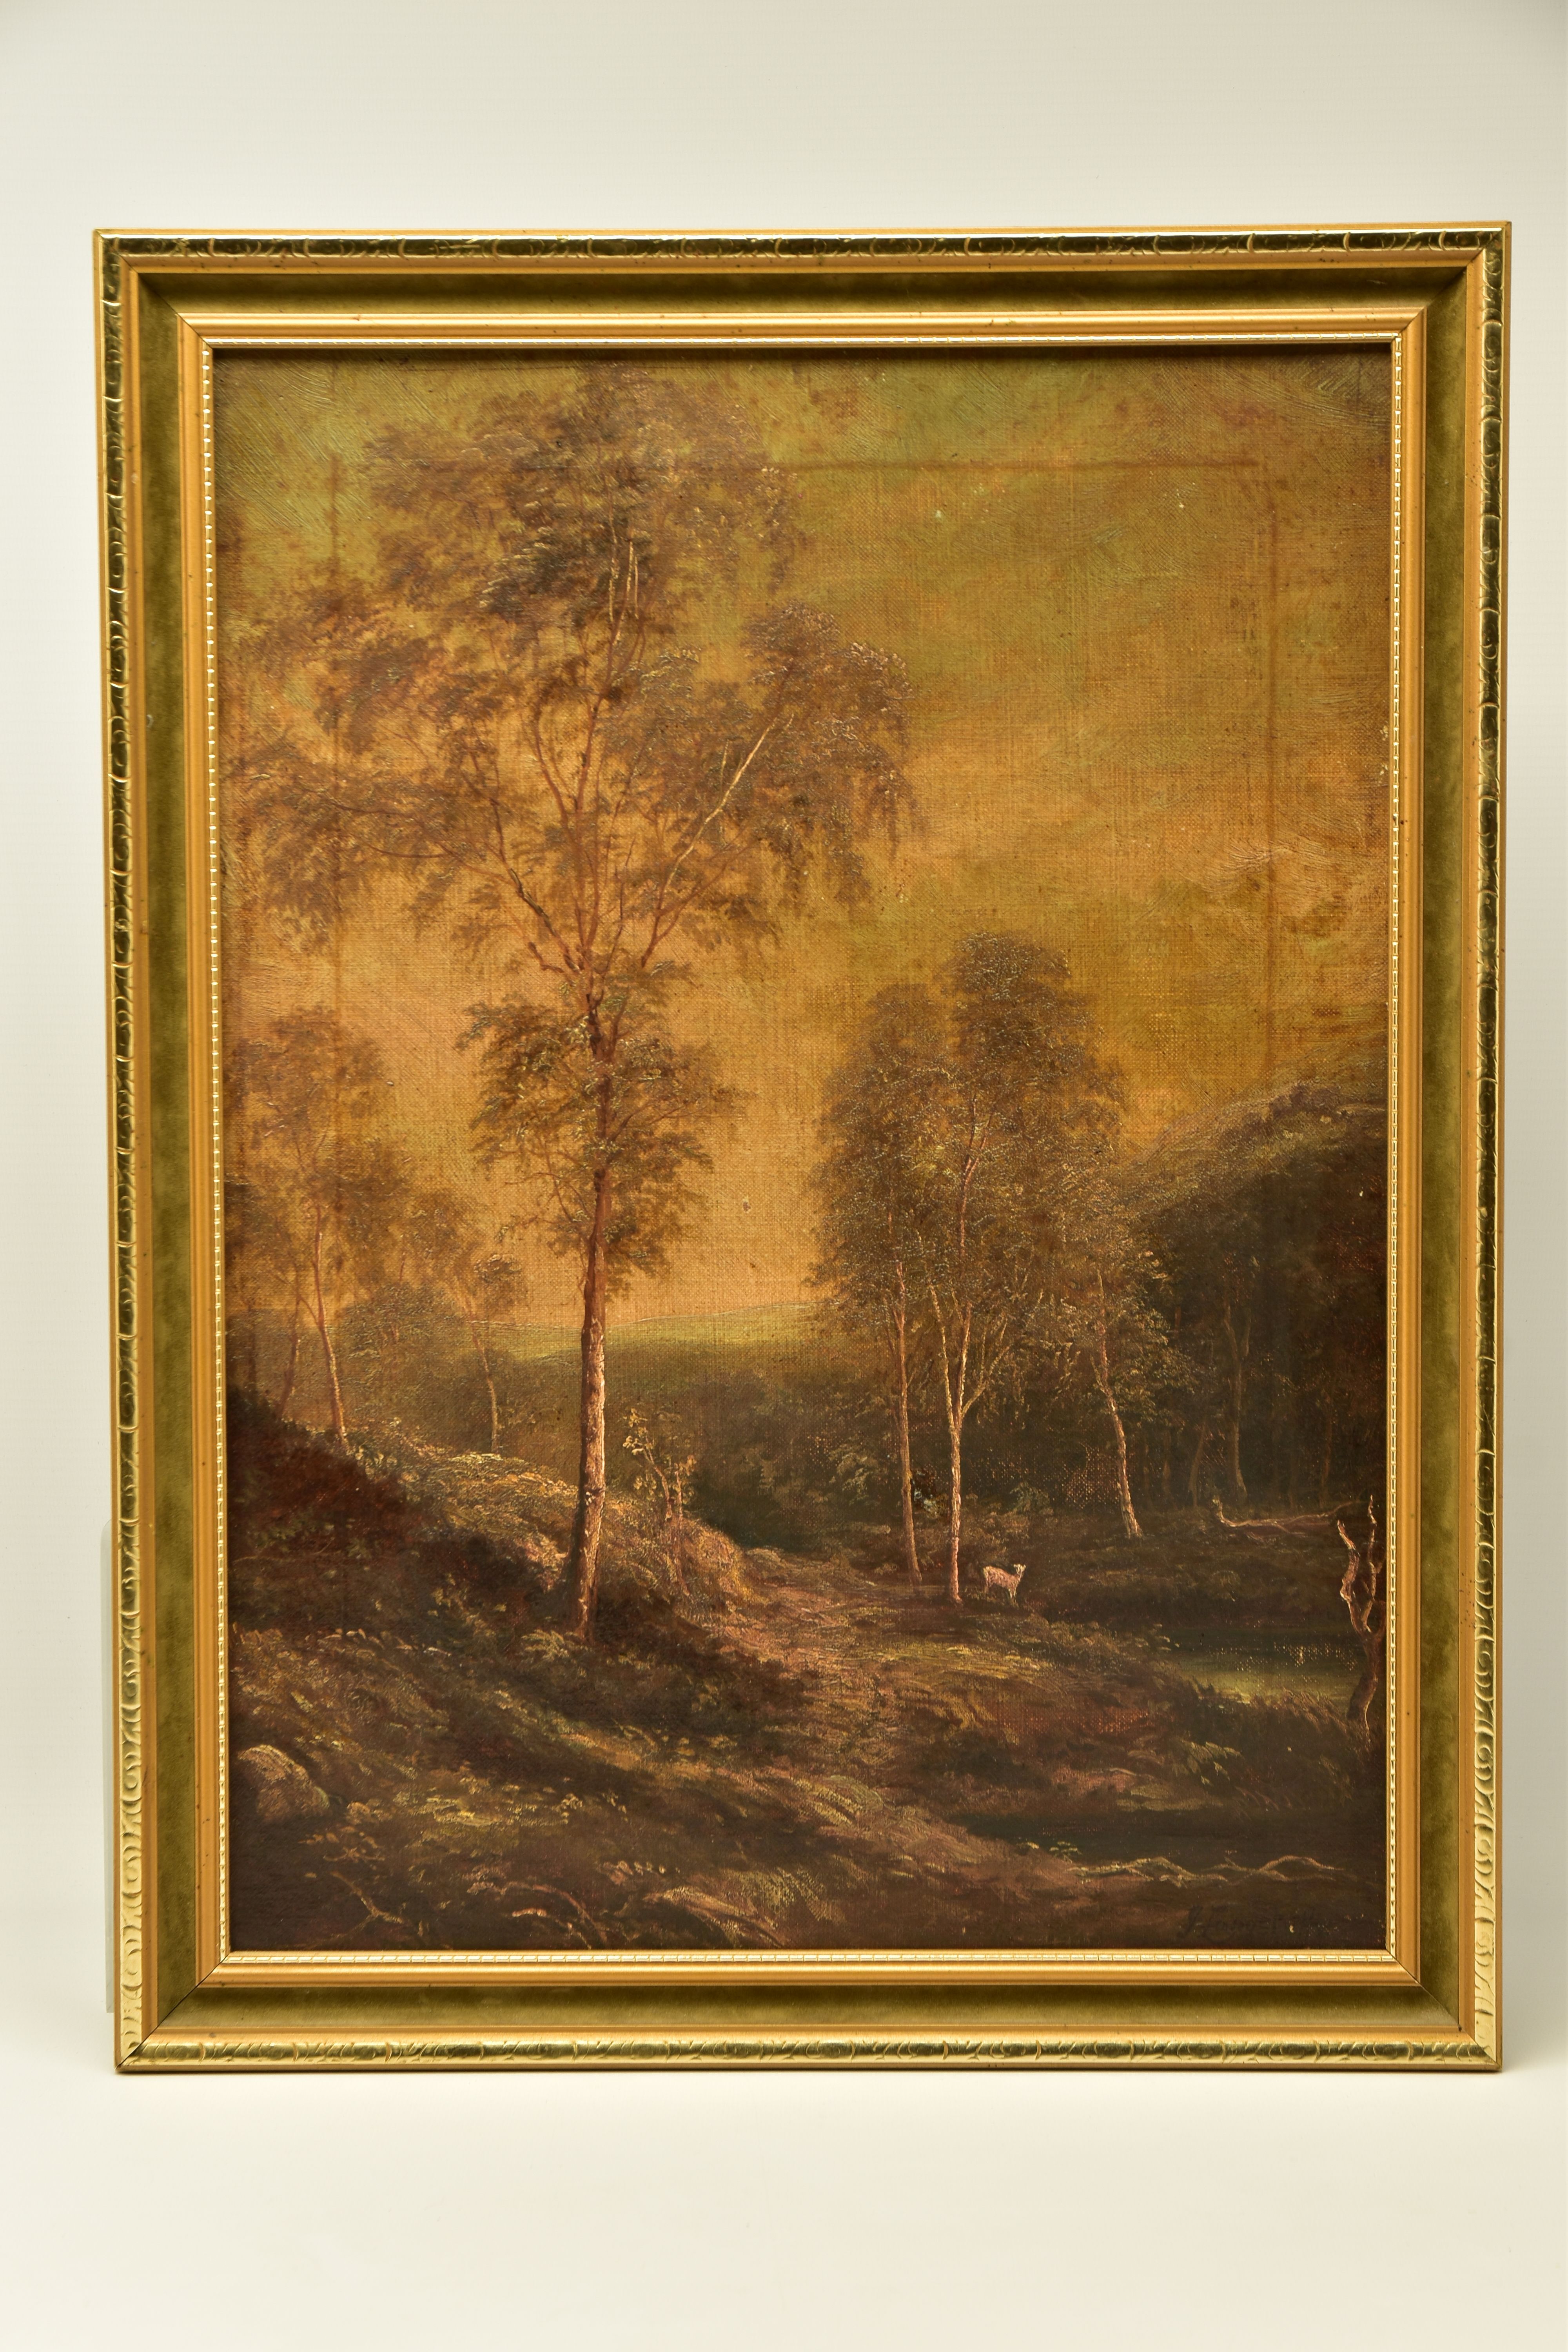 JOHN LONGSTAFFE (1849-1912) UNTITLED, AN ENGLISH SCHOOL LANDSCAPE, a path through a thinly wooded